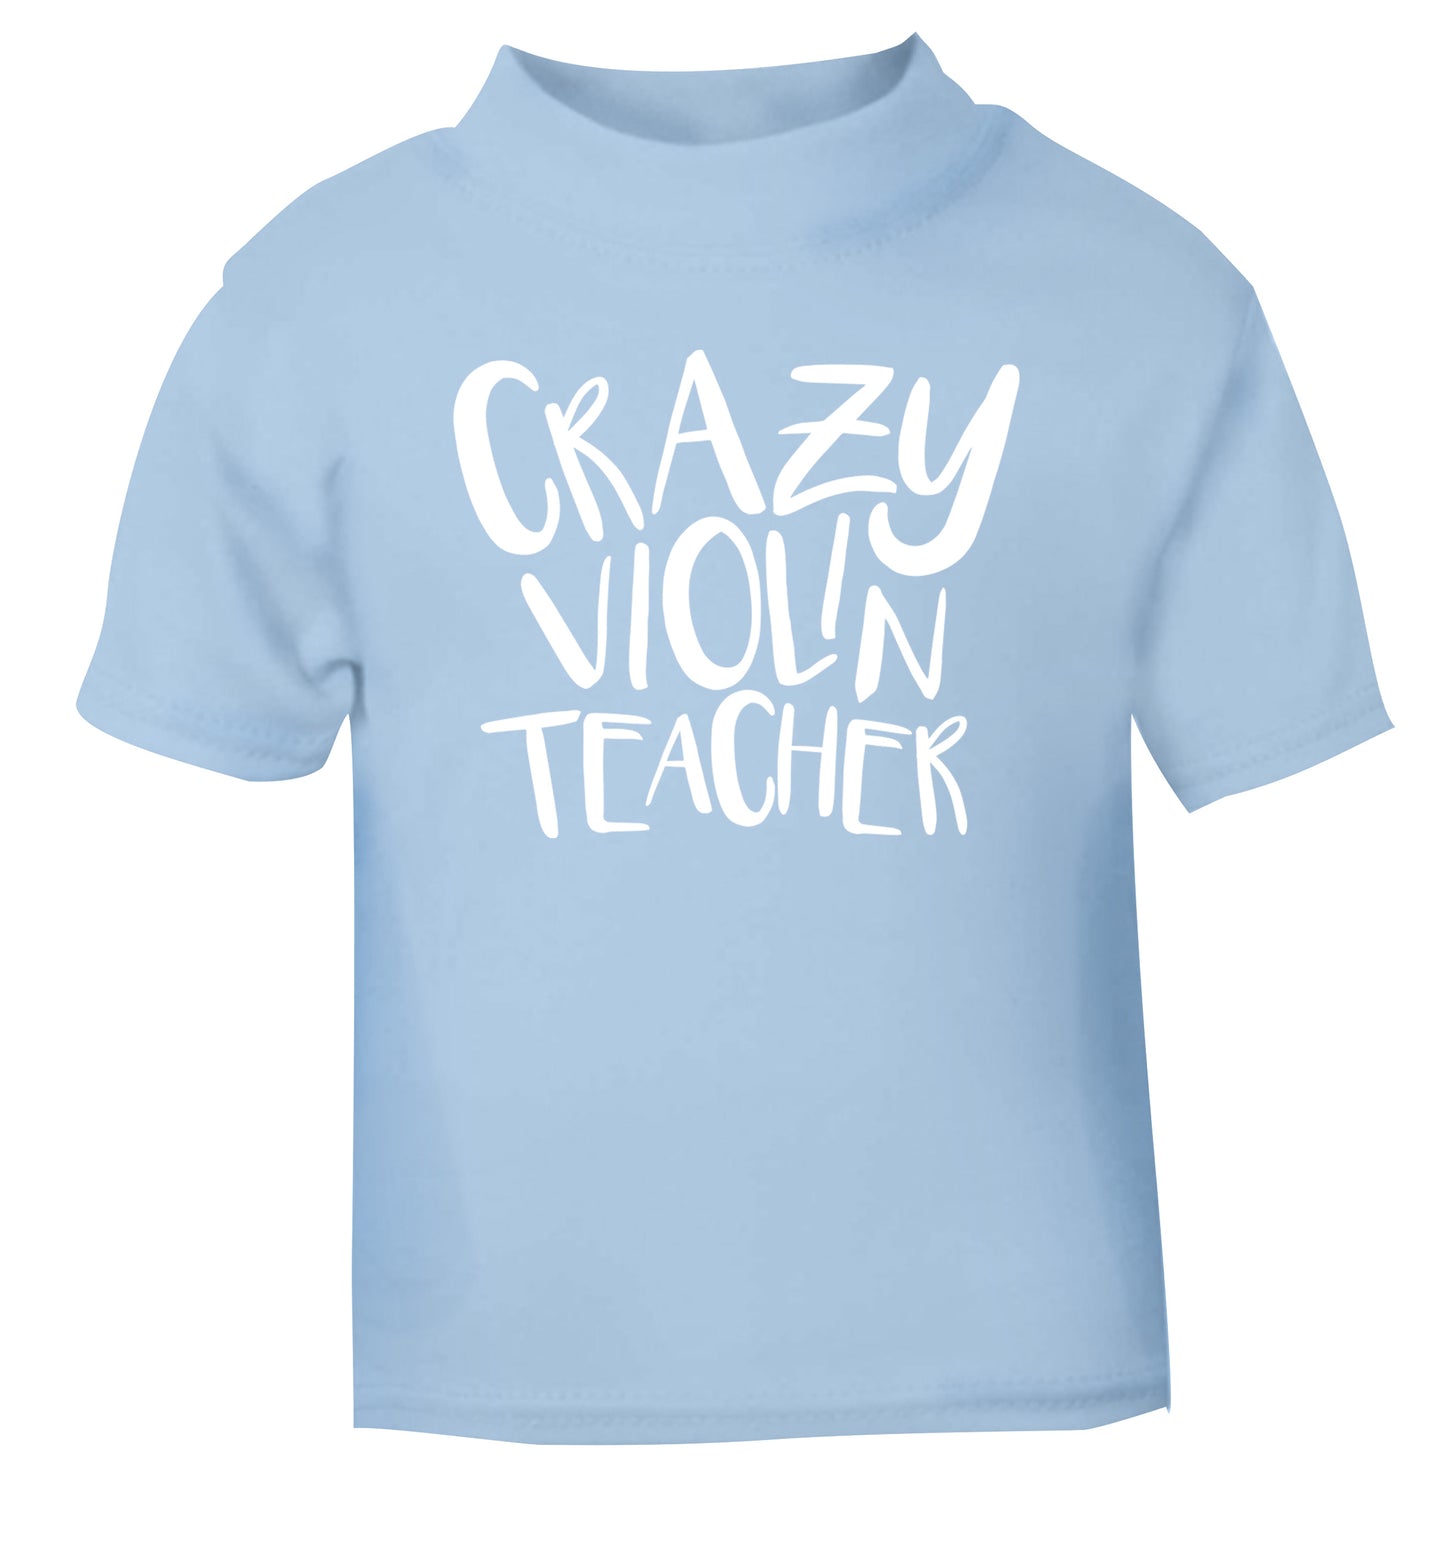 Crazy violin teacher light blue Baby Toddler Tshirt 2 Years